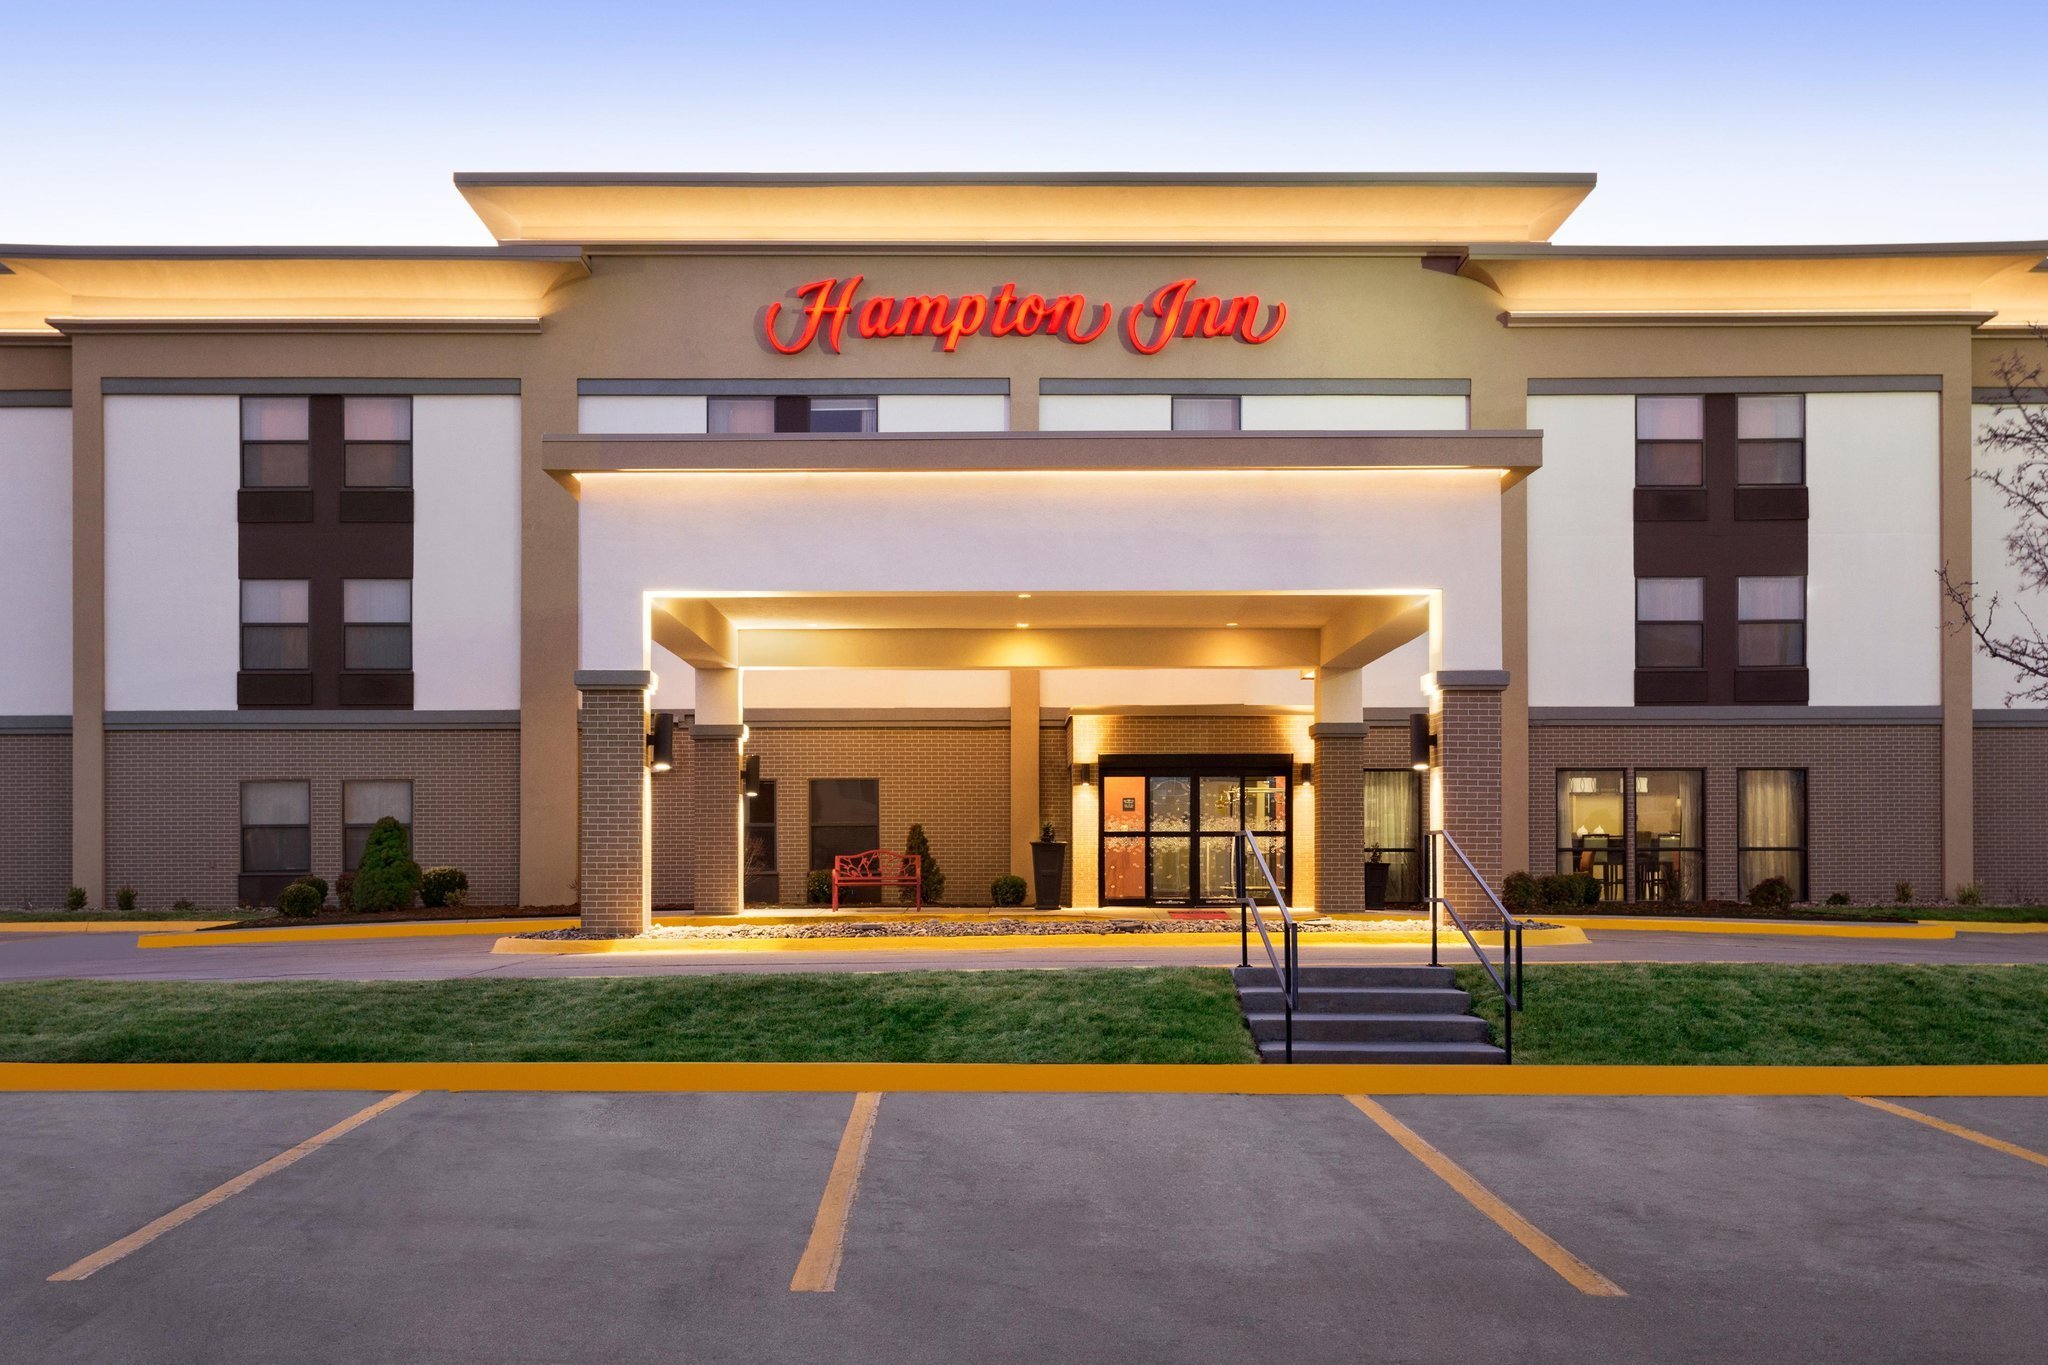 Photo of Hampton Inn Wichita-East, Wichita, KS